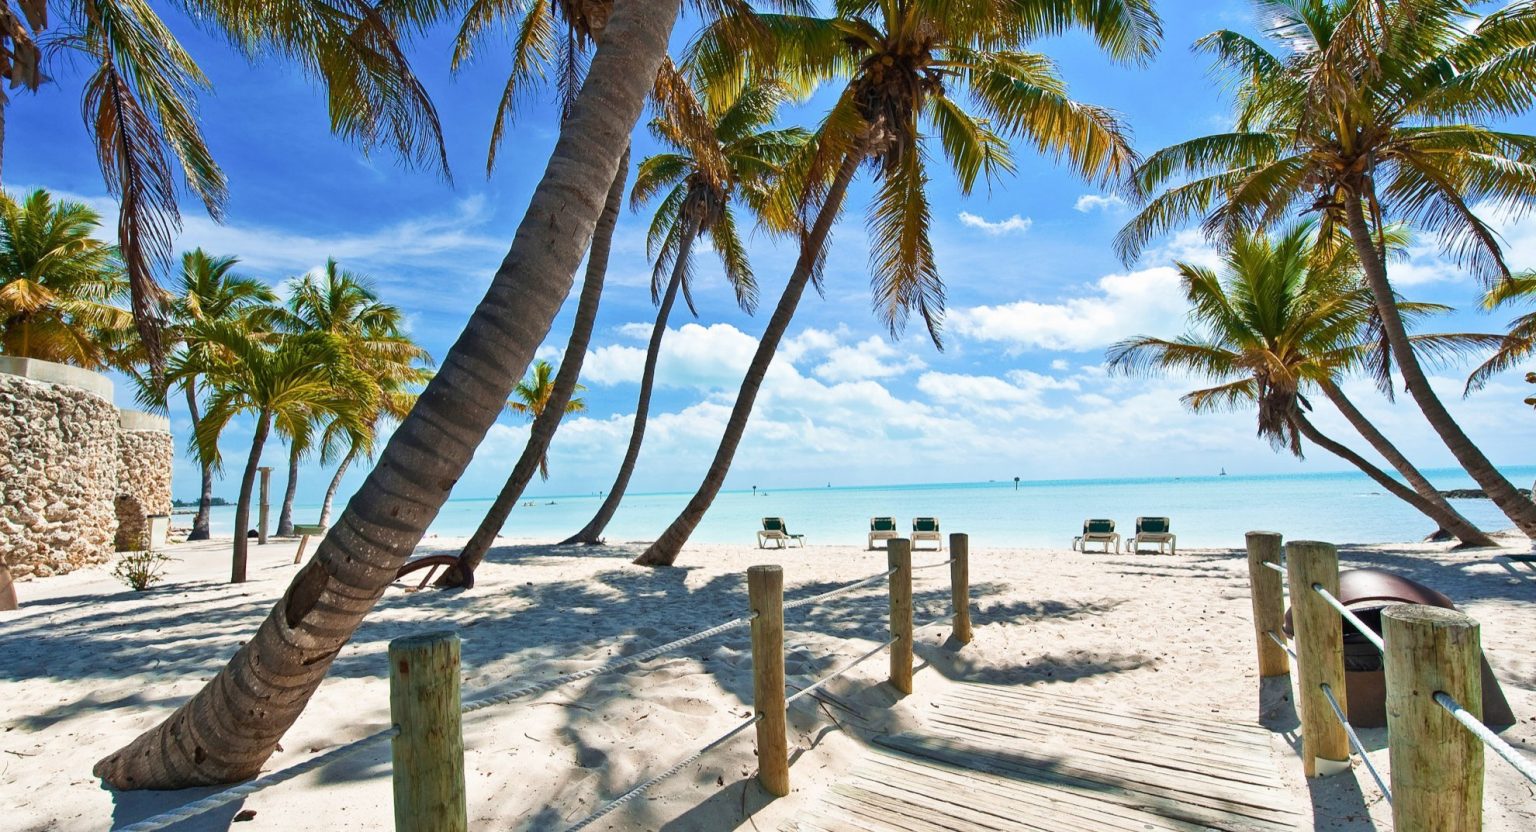 Key West: A Travel Destination With An Island Feel